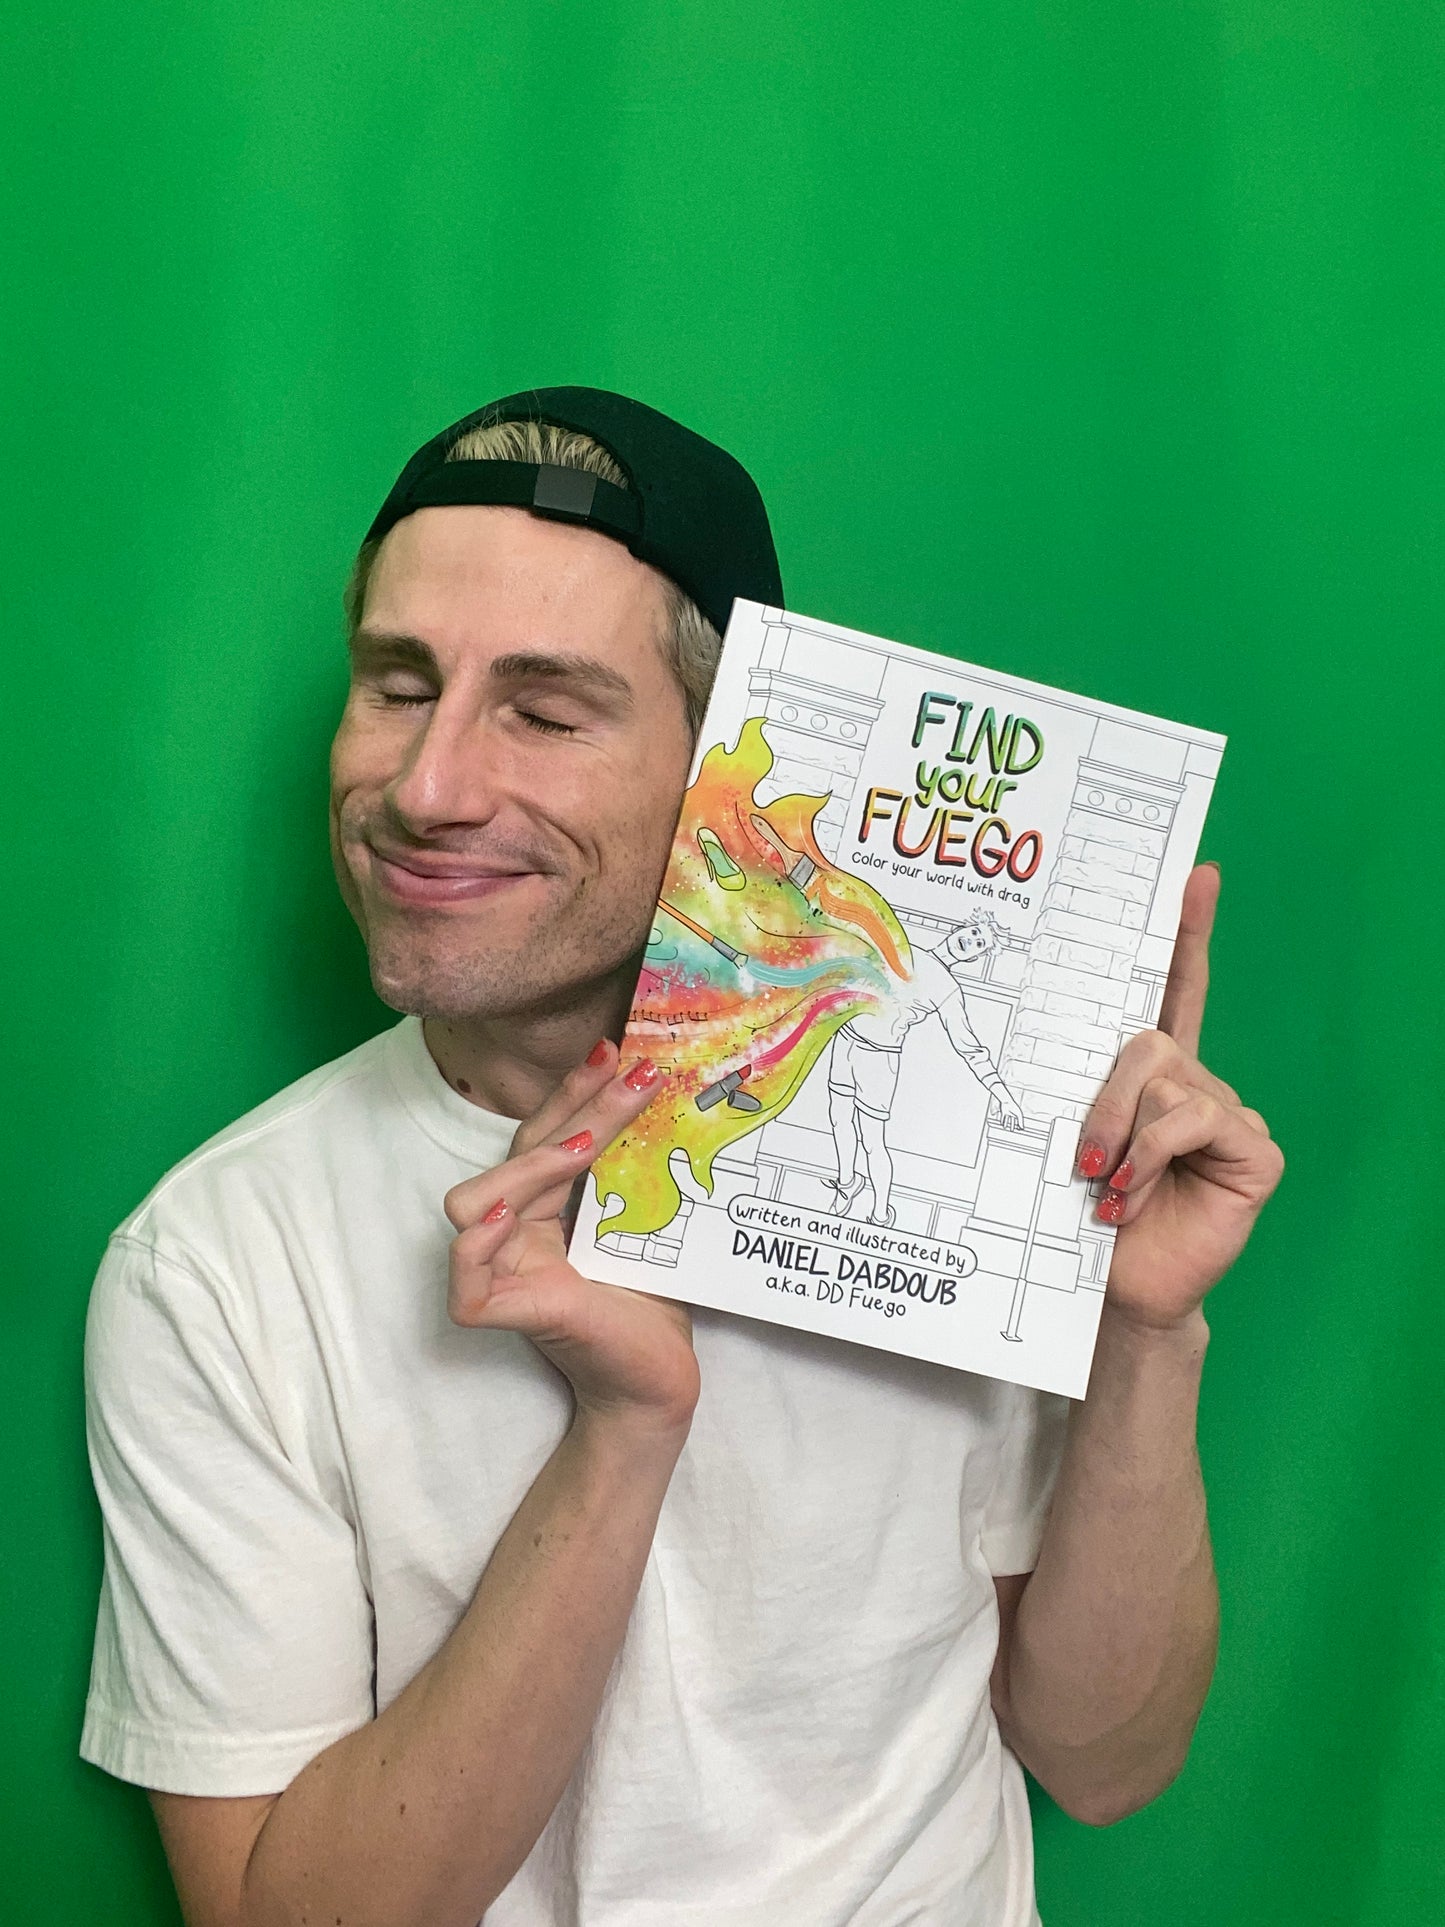 "Find Your Fuego" Coloring/Activity Storybook